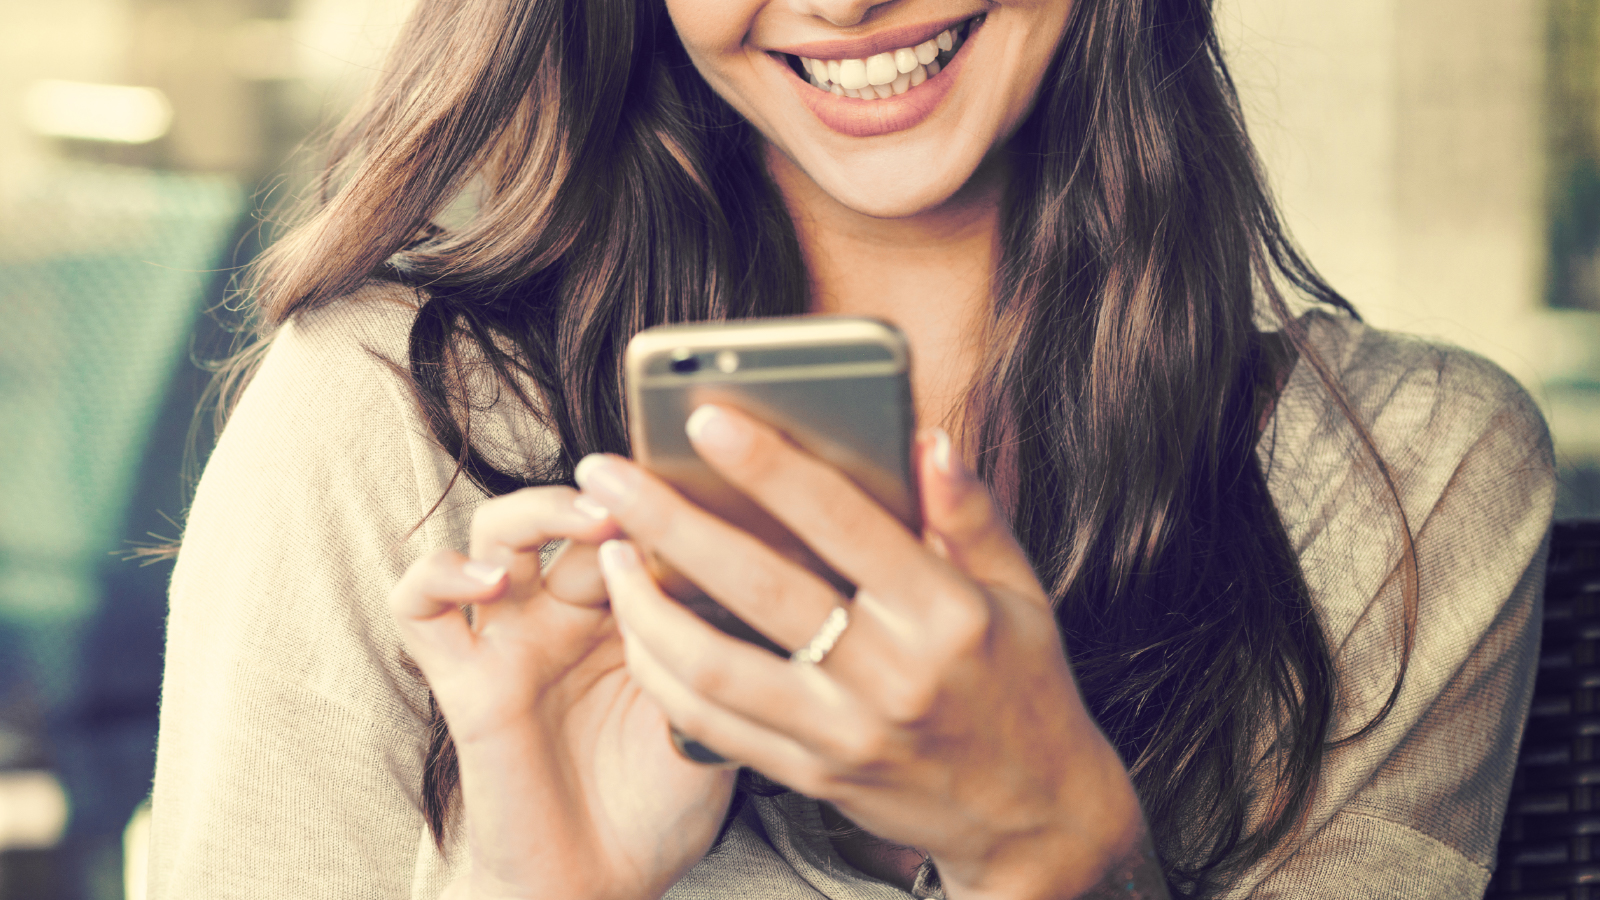 girl looking at phone screen smiling